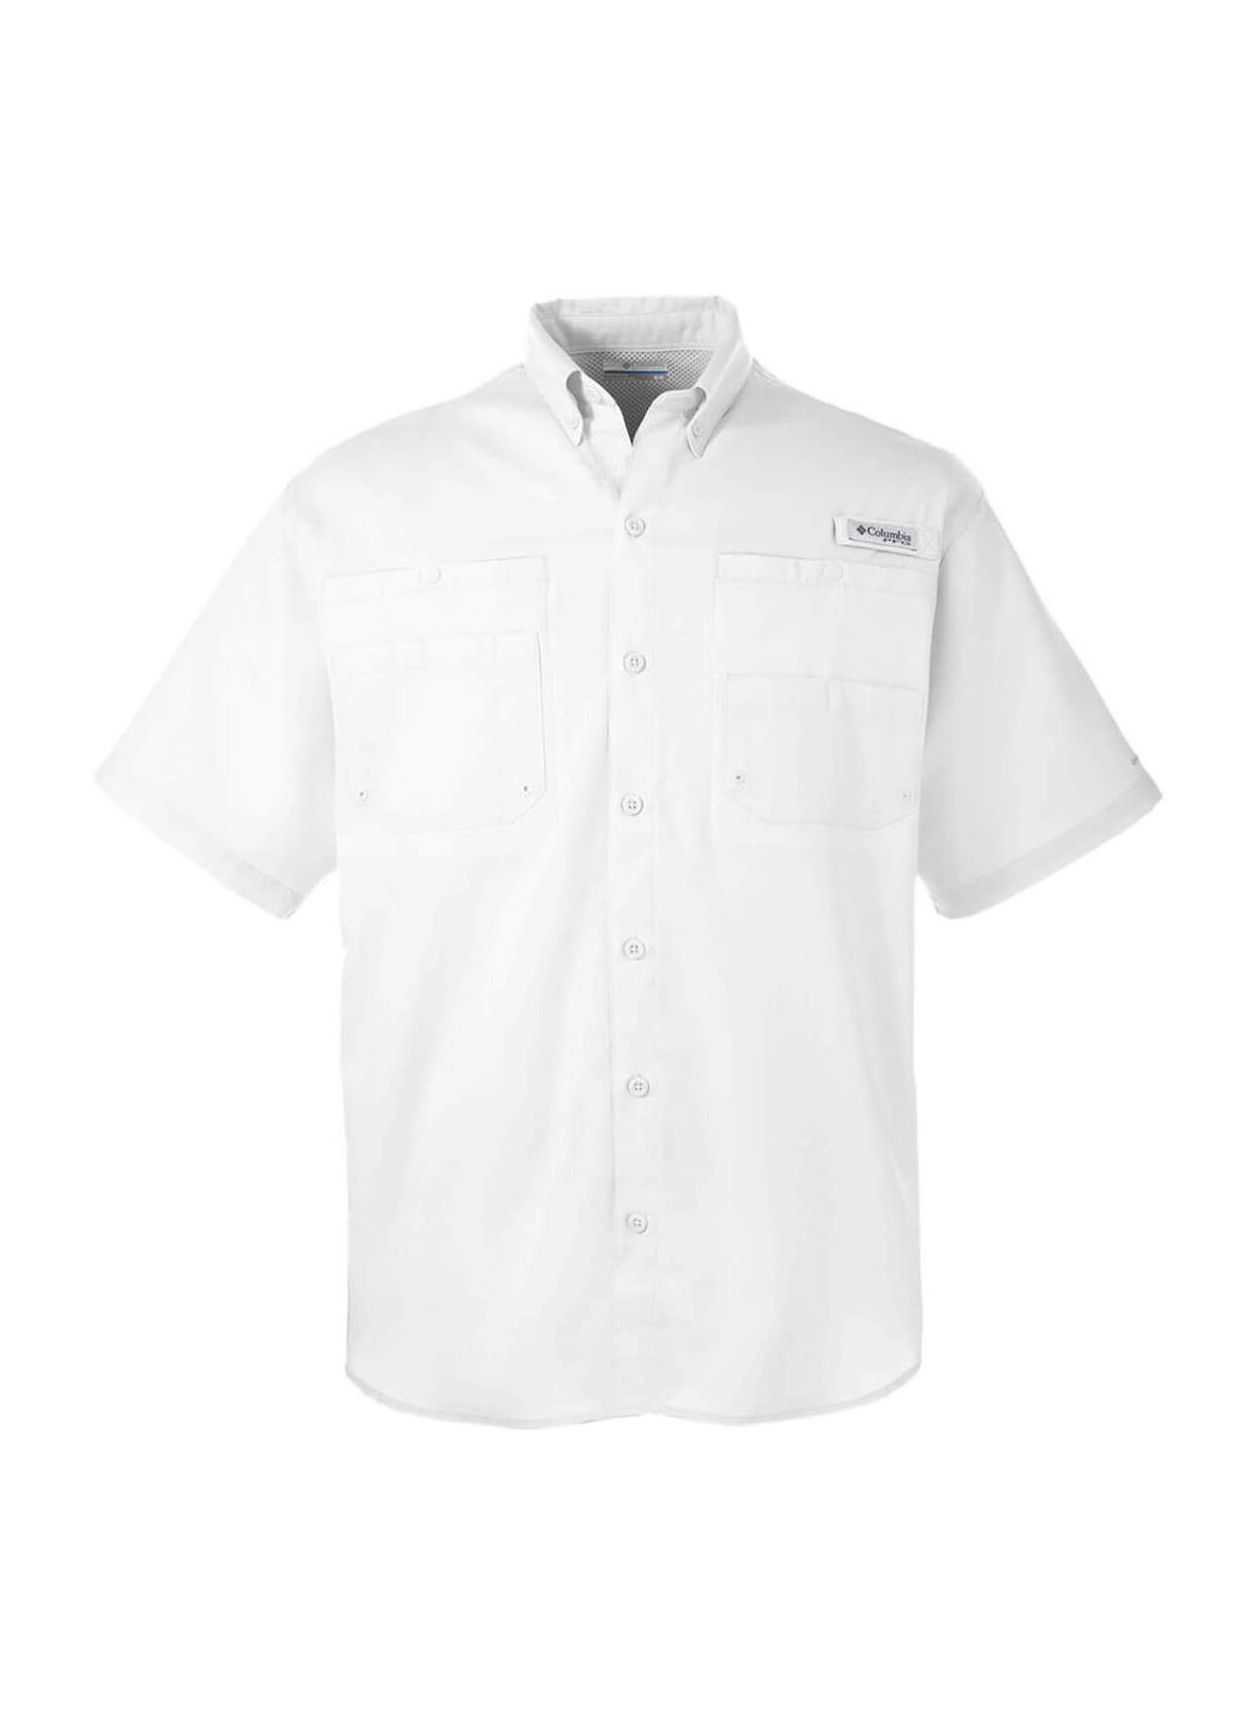 Columbia Men's White Short-Sleeve Shirt